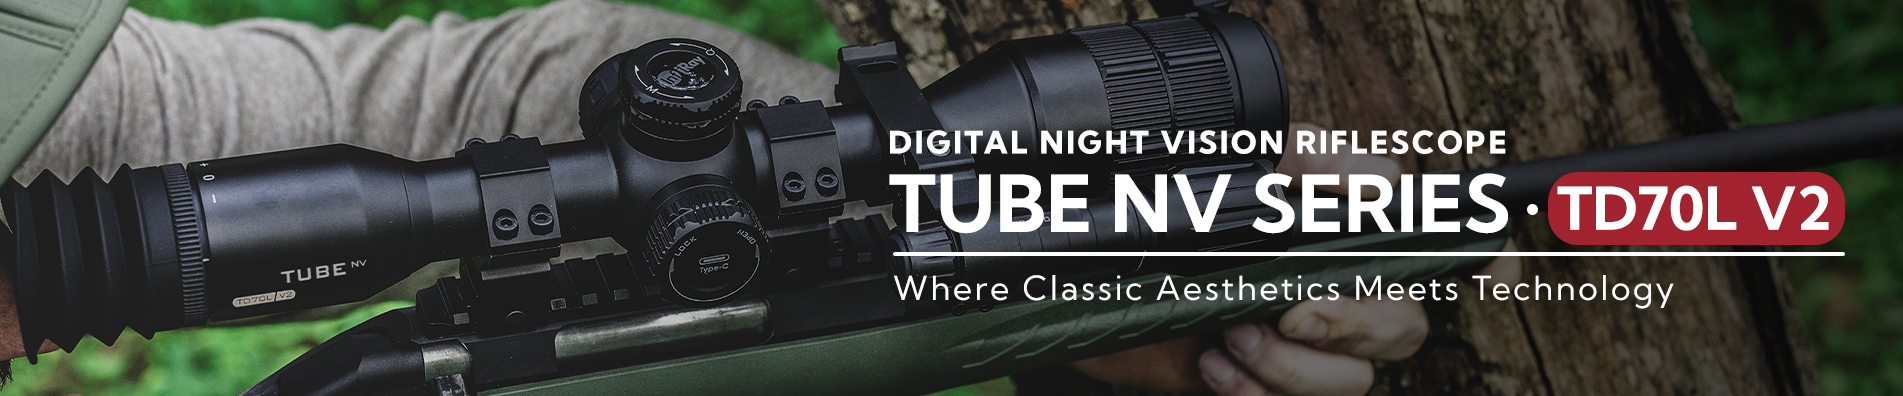 Digital Night Vision Riflescope TUBE NV v2 Series- TD70L V2